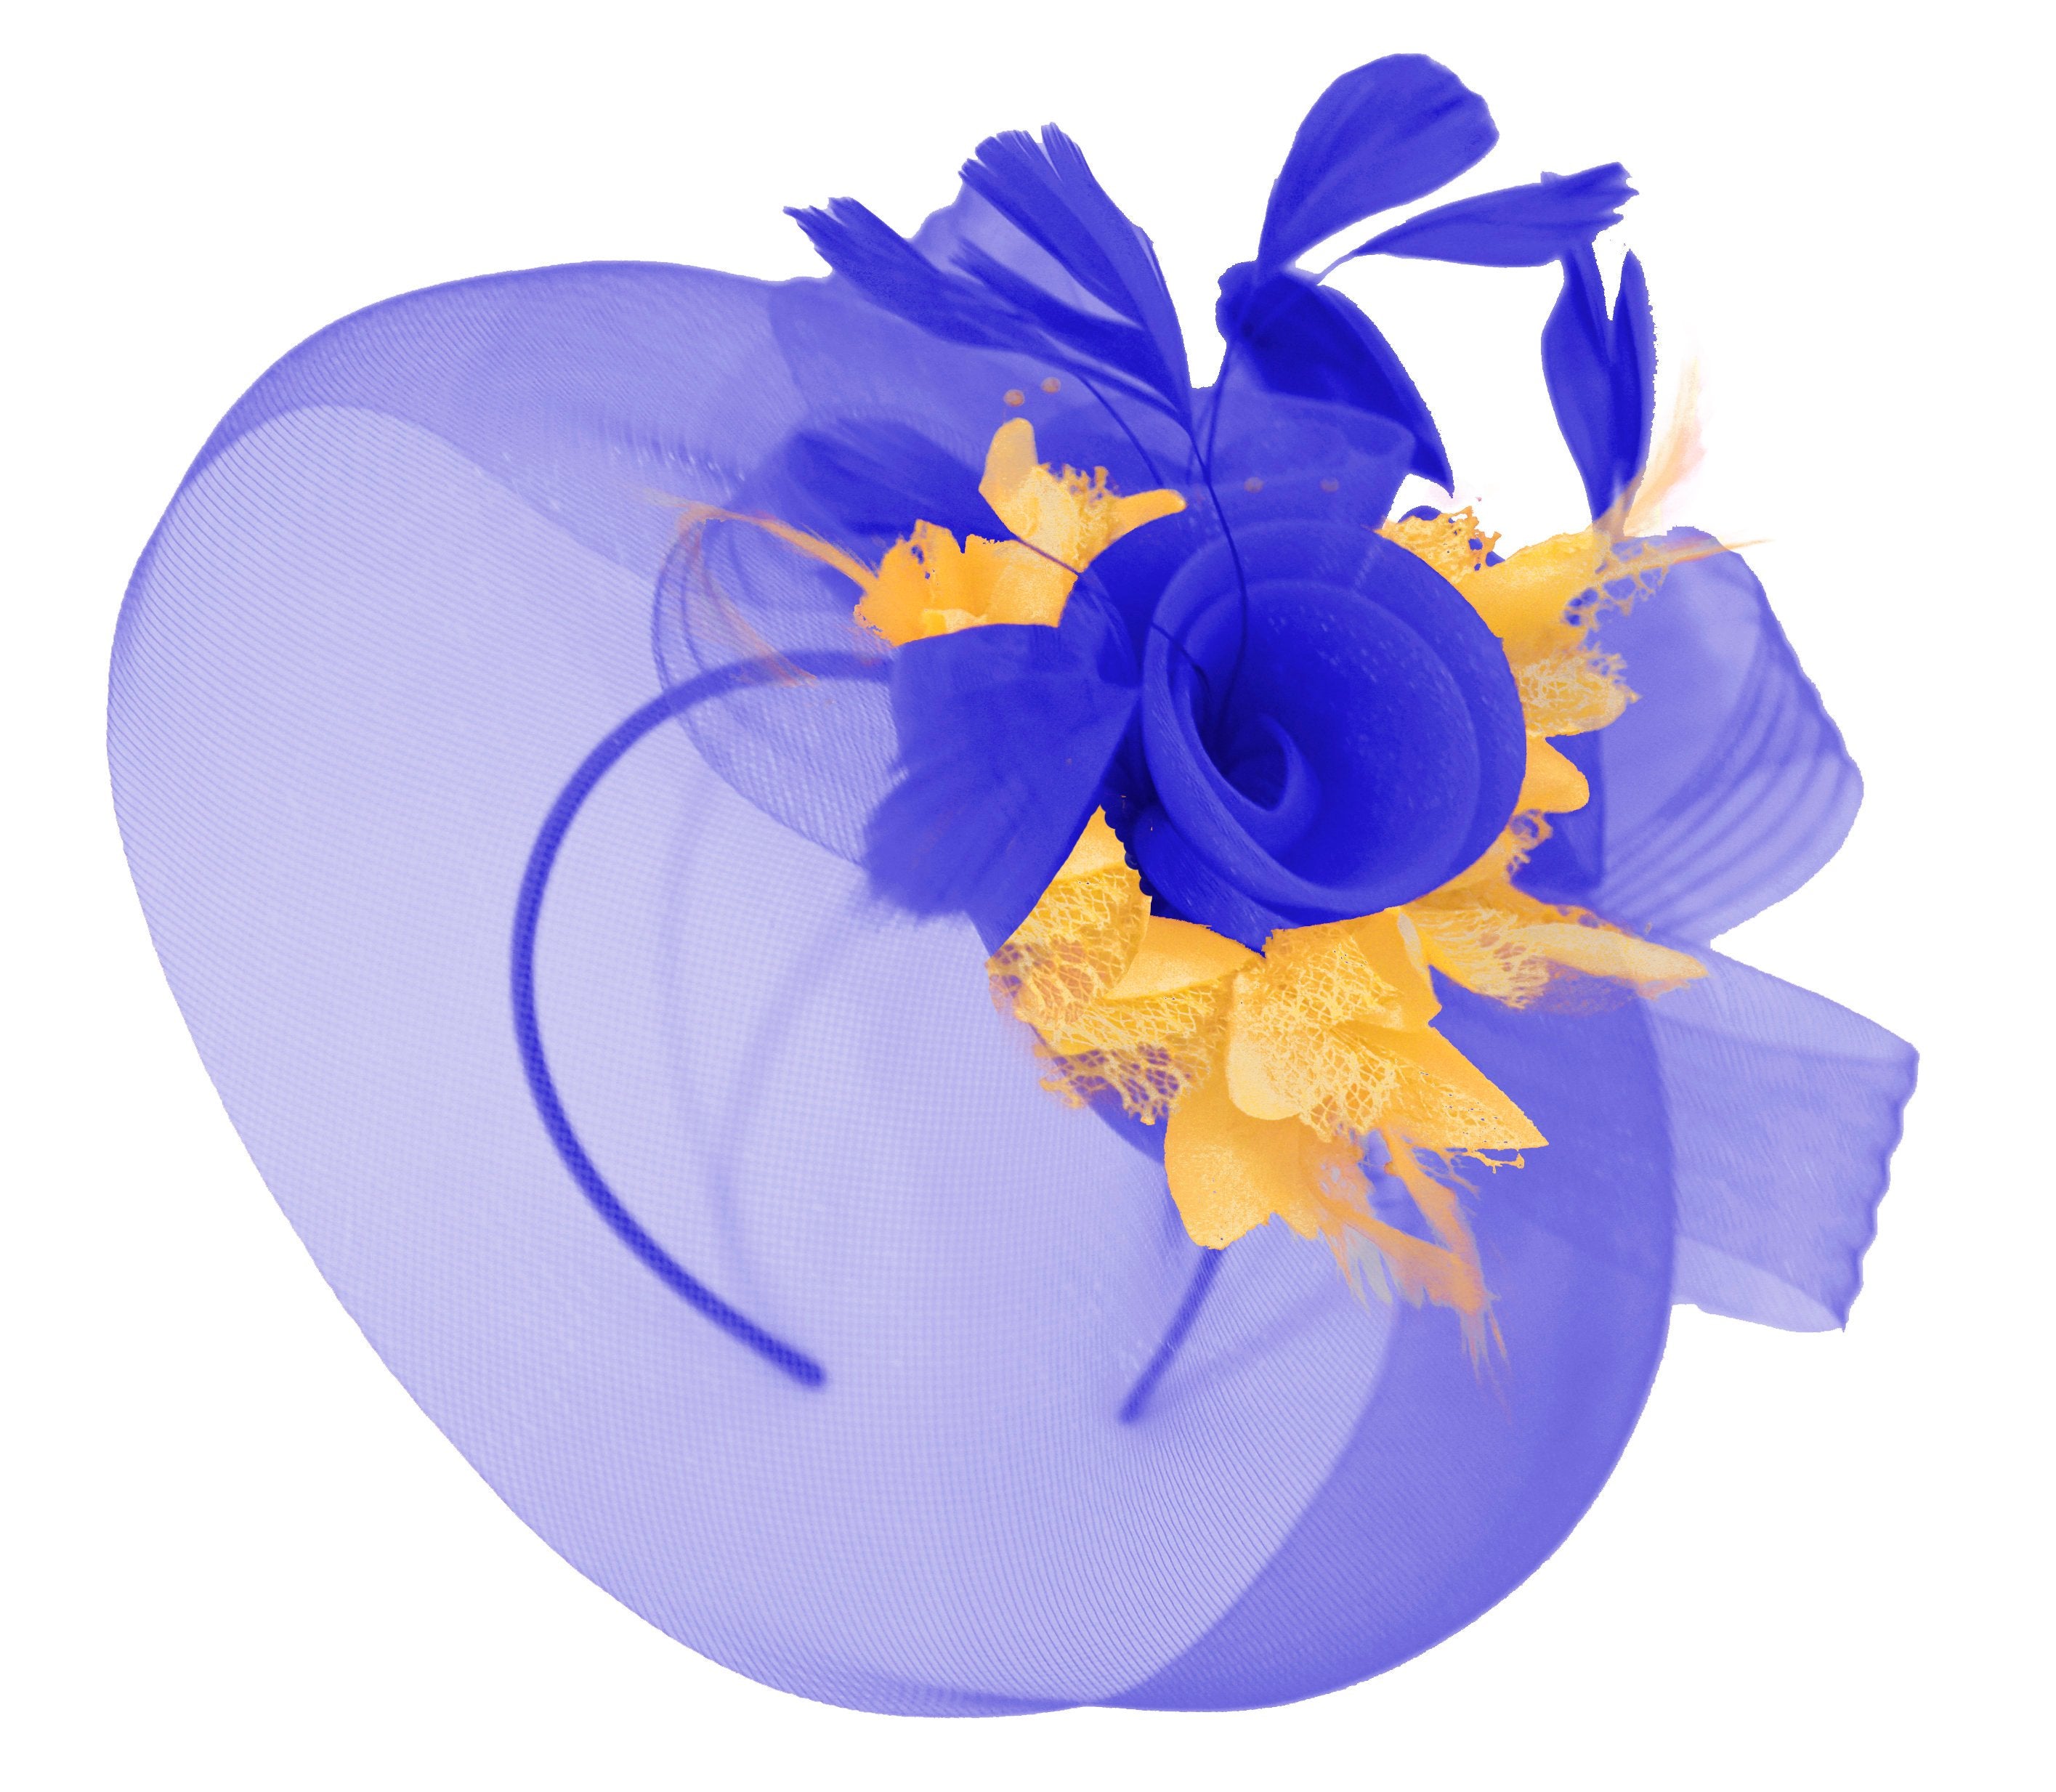 Caprilite Big Royal Blue and Gold Fascinator Hat Veil Net Hair Clip Ascot Derby Races Wedding Headband Feather Flower